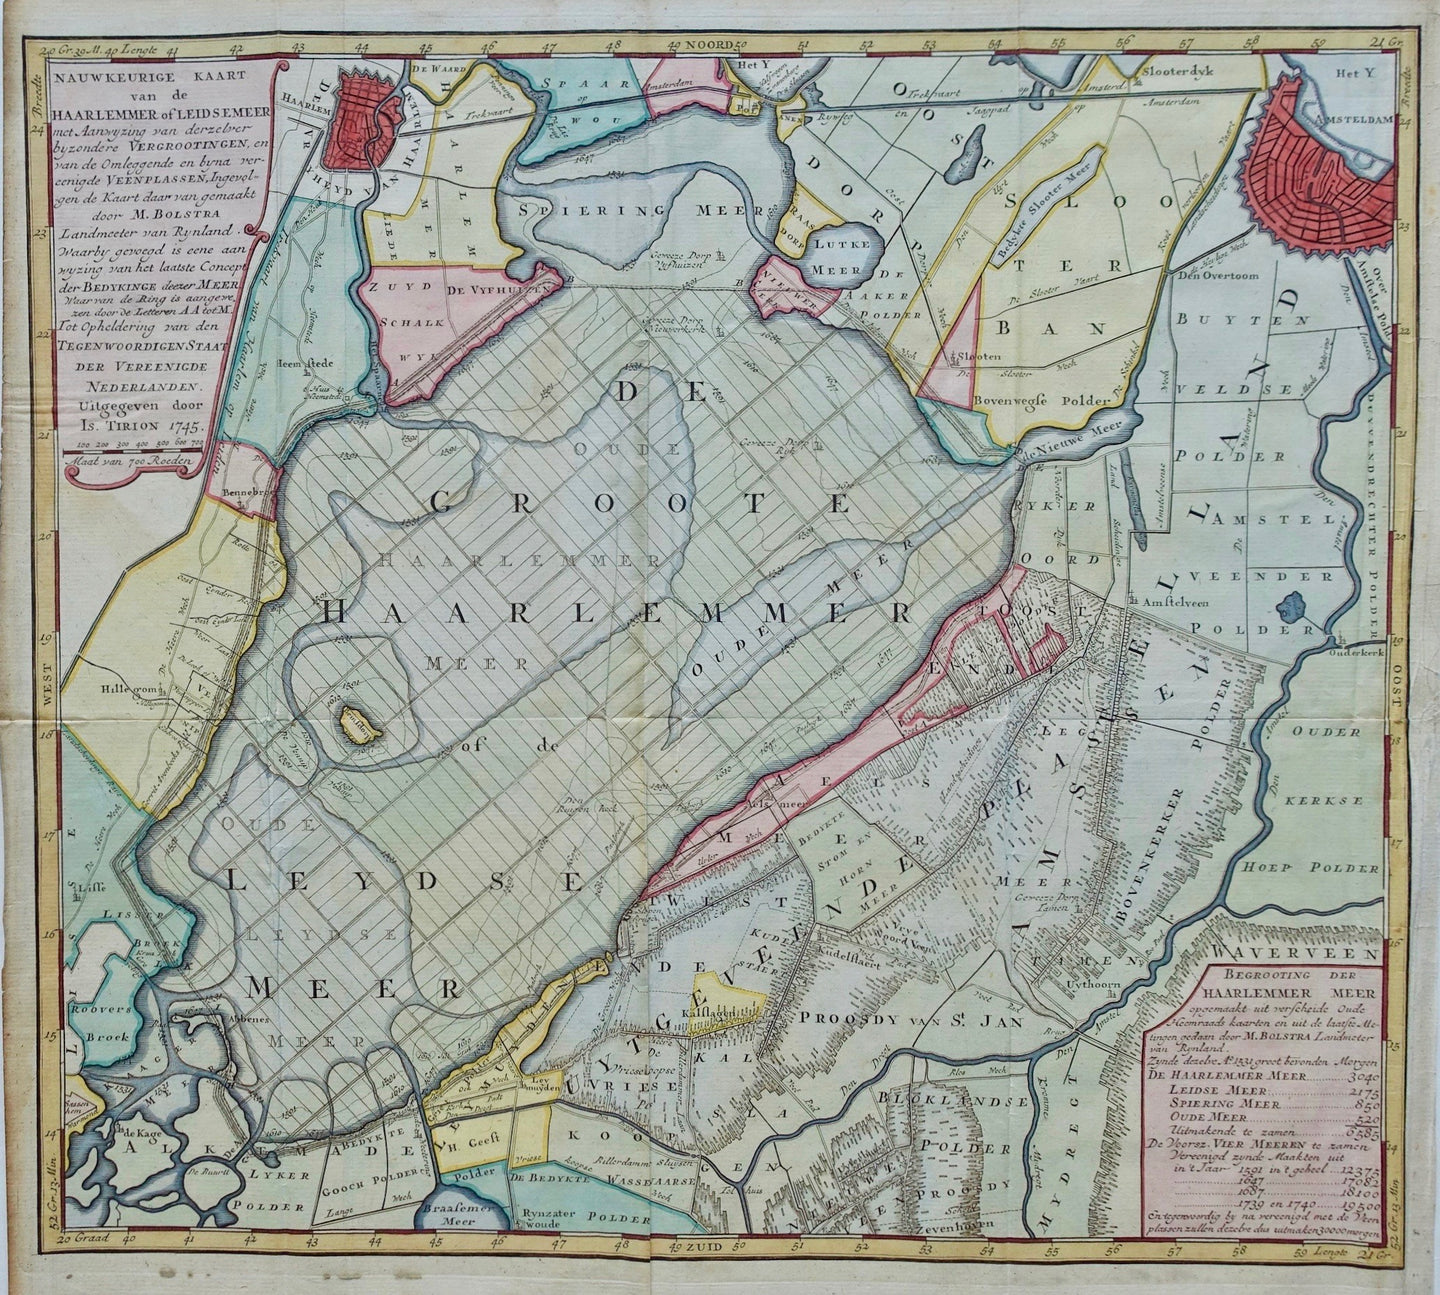 Haarlemmermeer - I Tirion - 1745